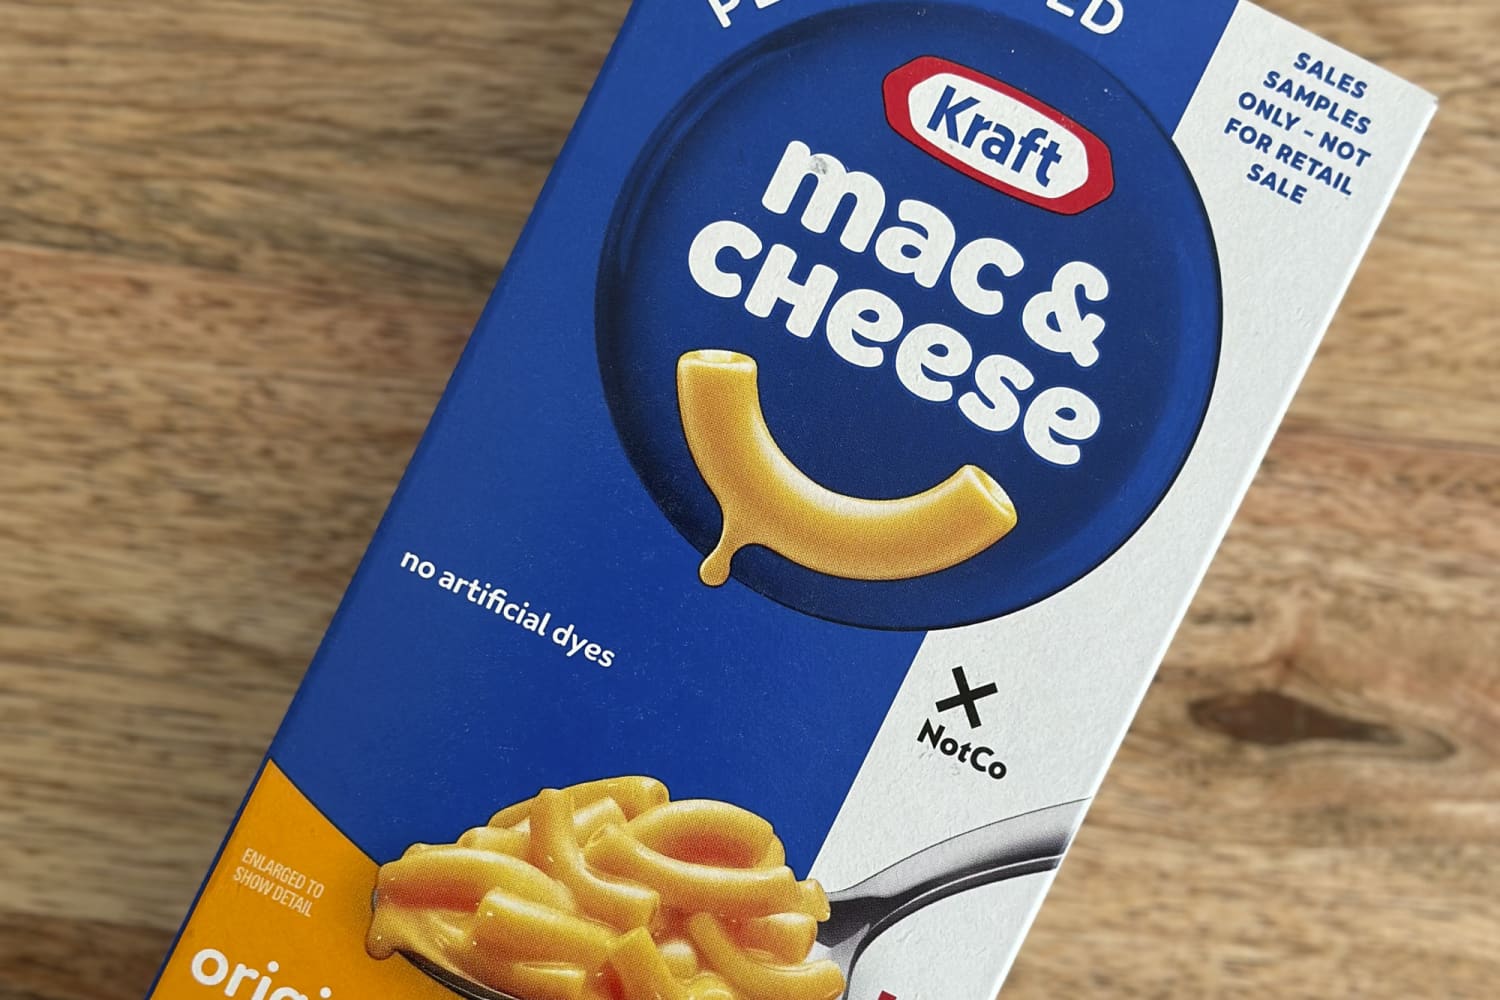 Who Eats the Most Kraft Mac & Cheese?